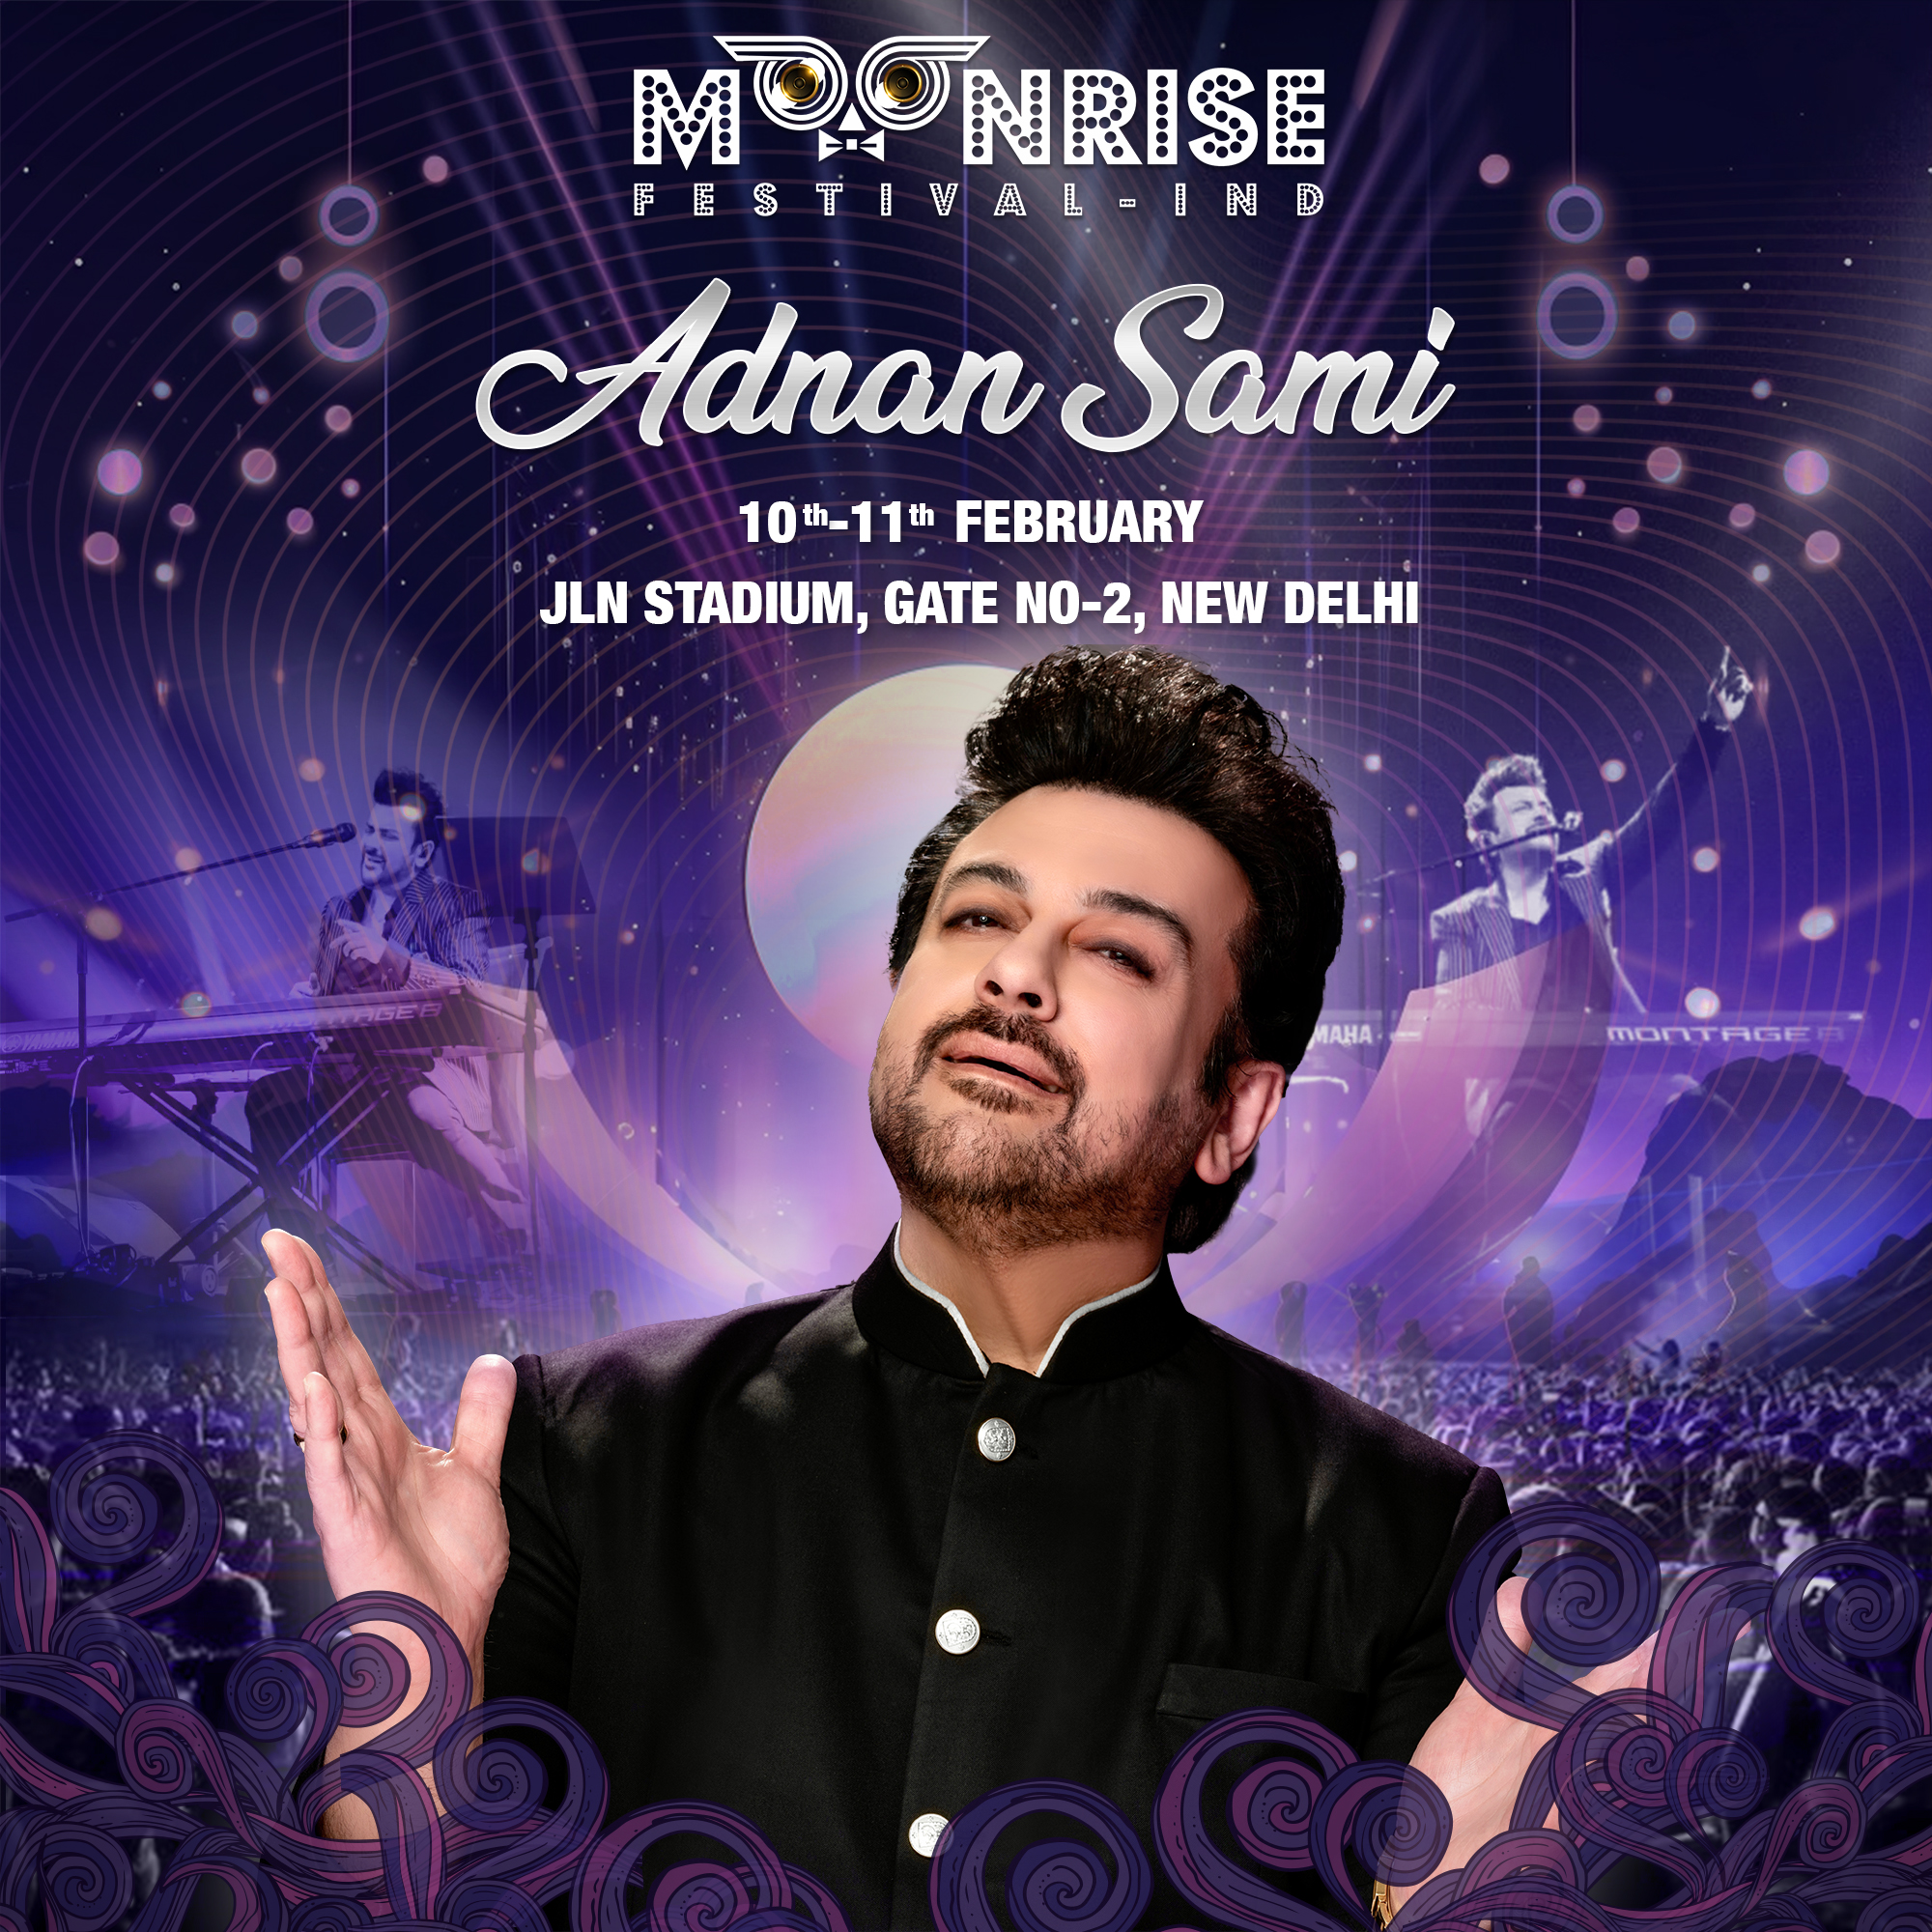 Moonrise Festival: Adnan Sami and Akhil Sachdeva to perform in Delhi